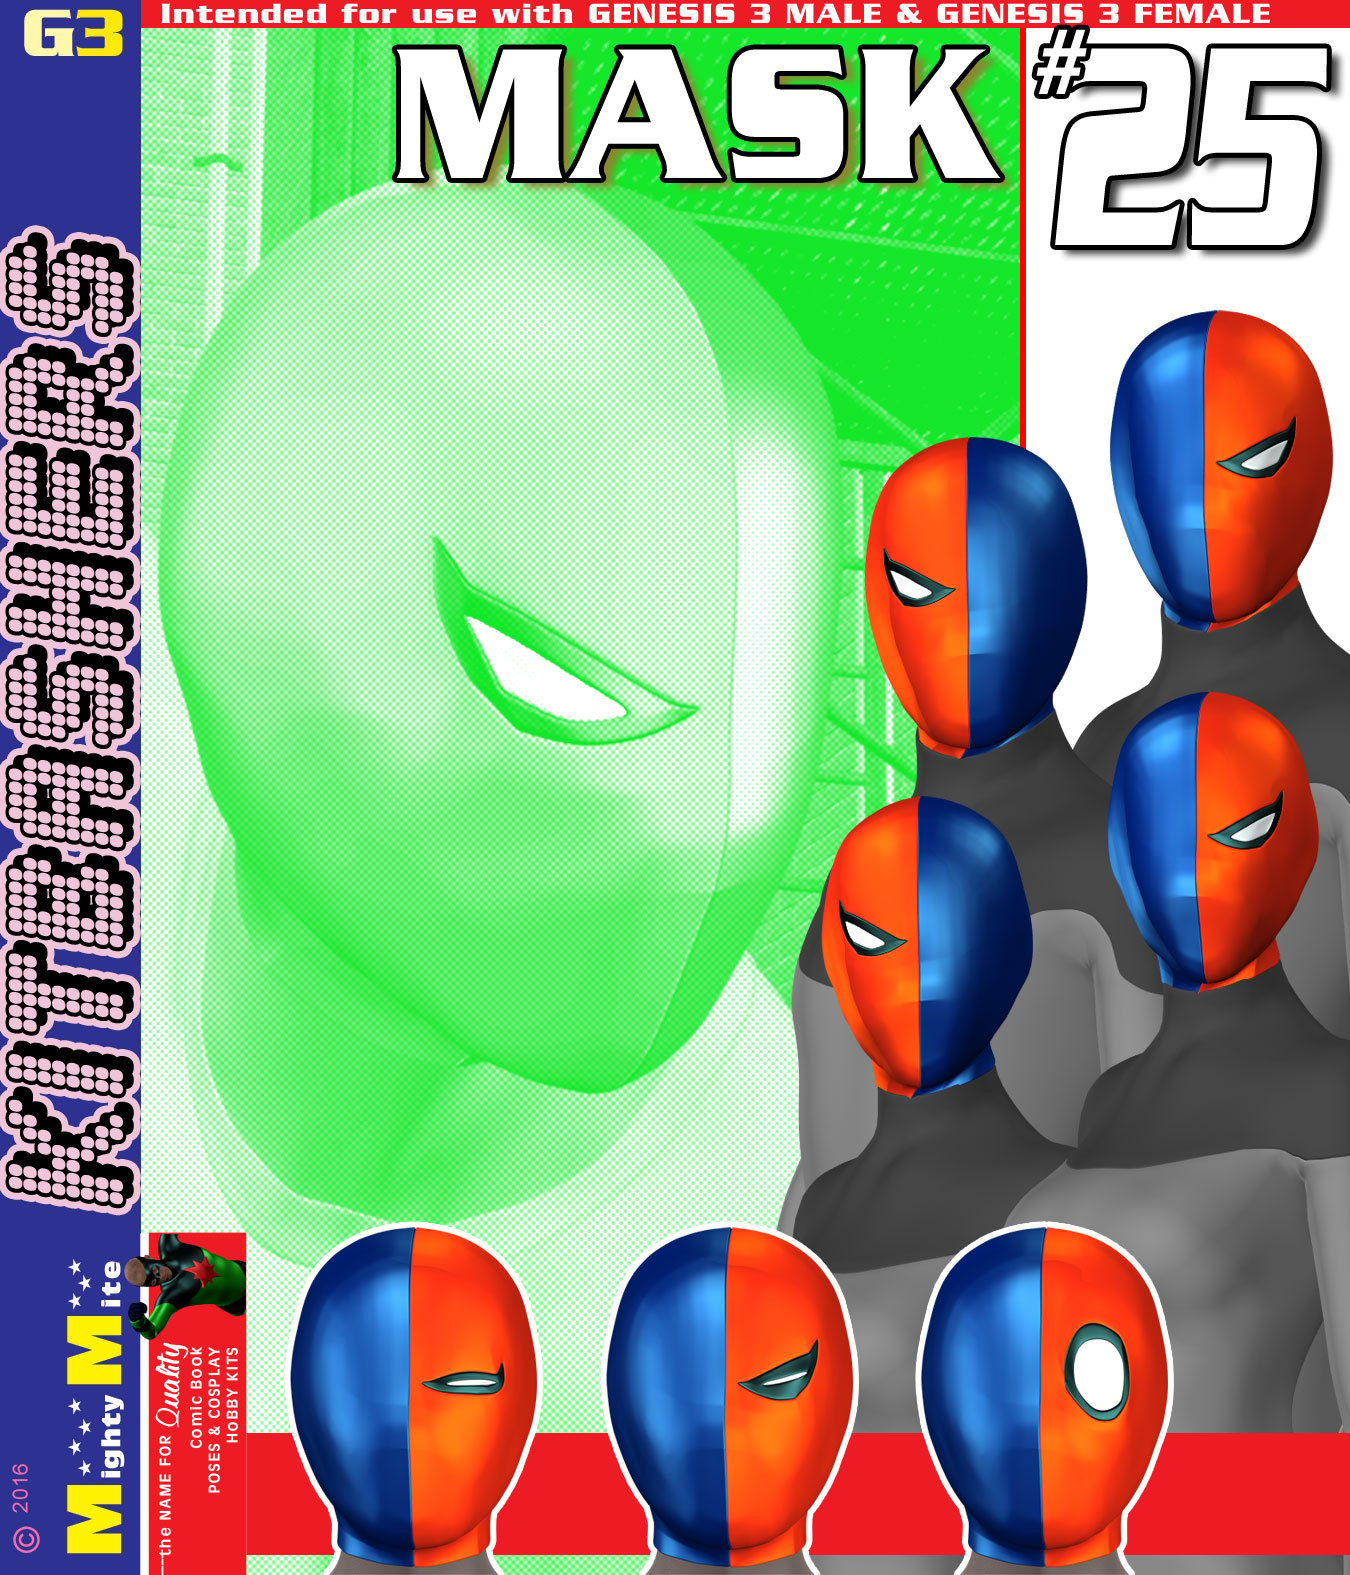 Mask 025 MMKBG3 by: MightyMite, 3D Models by Daz 3D